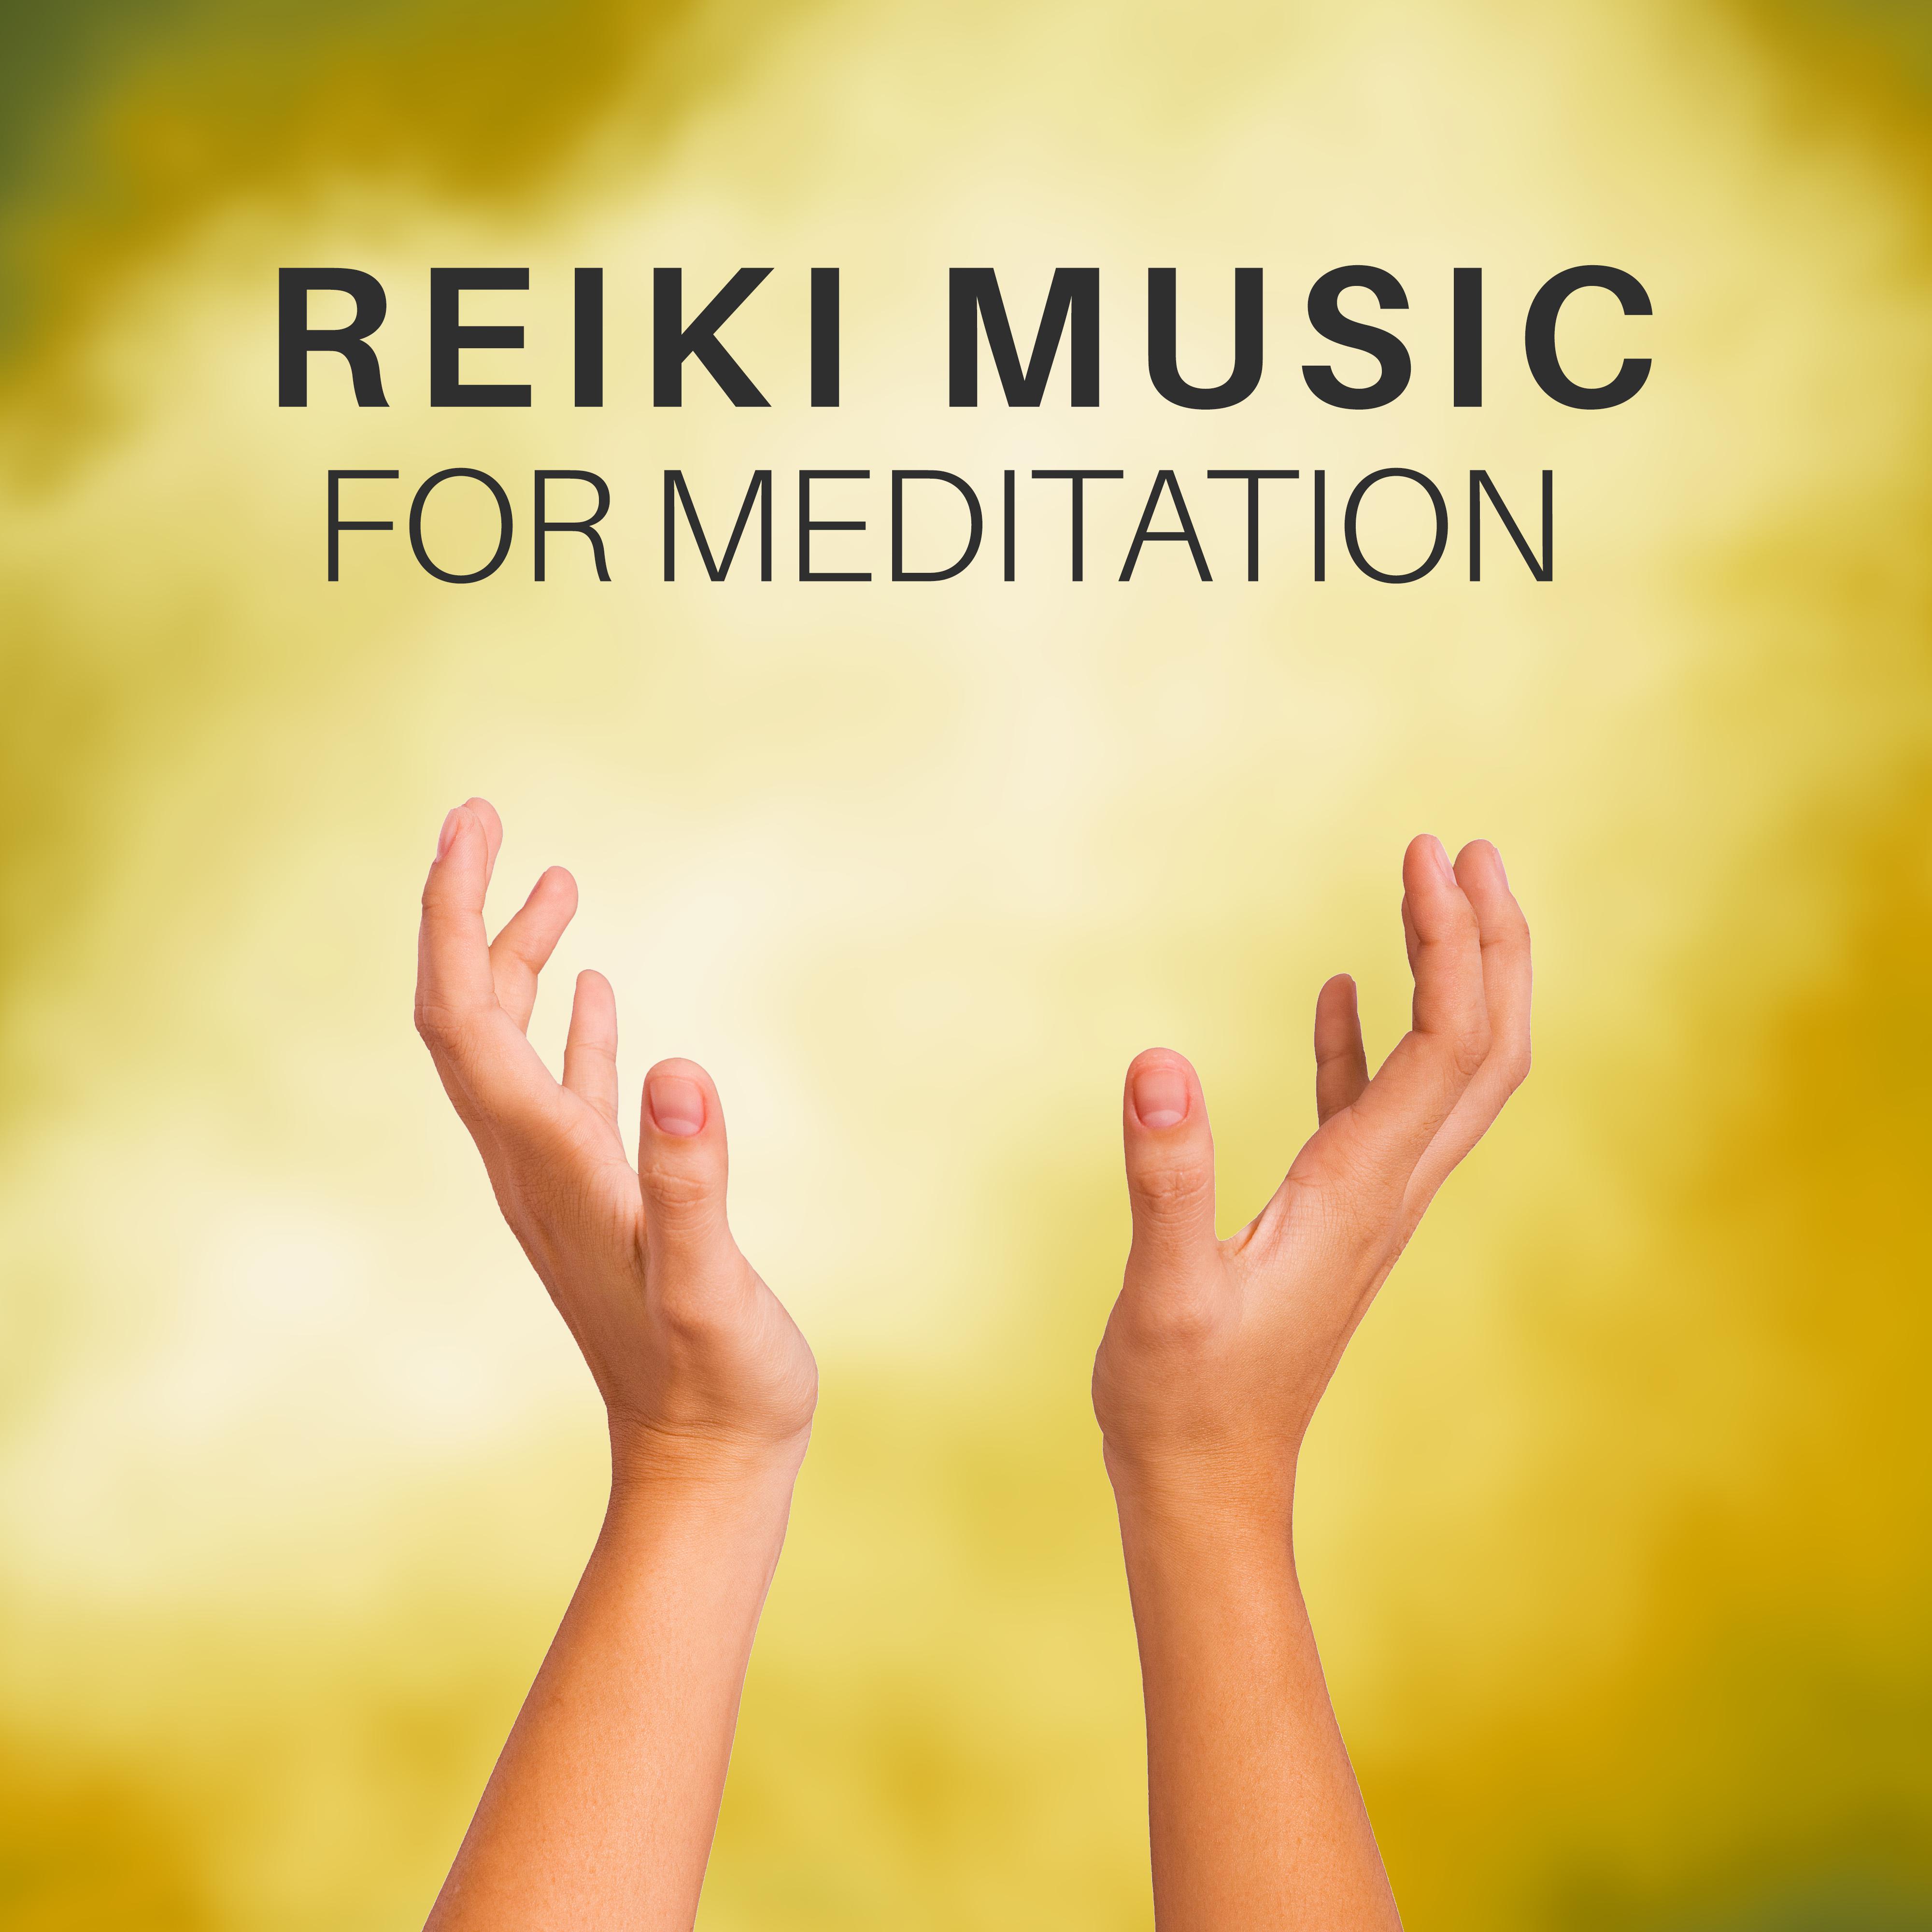 Reiki Music for Meditation – Training Yoga, Pure Mind, Zen, Buddha Lounge, Harmony, Deep Focus, Peaceful Music for Relaxation